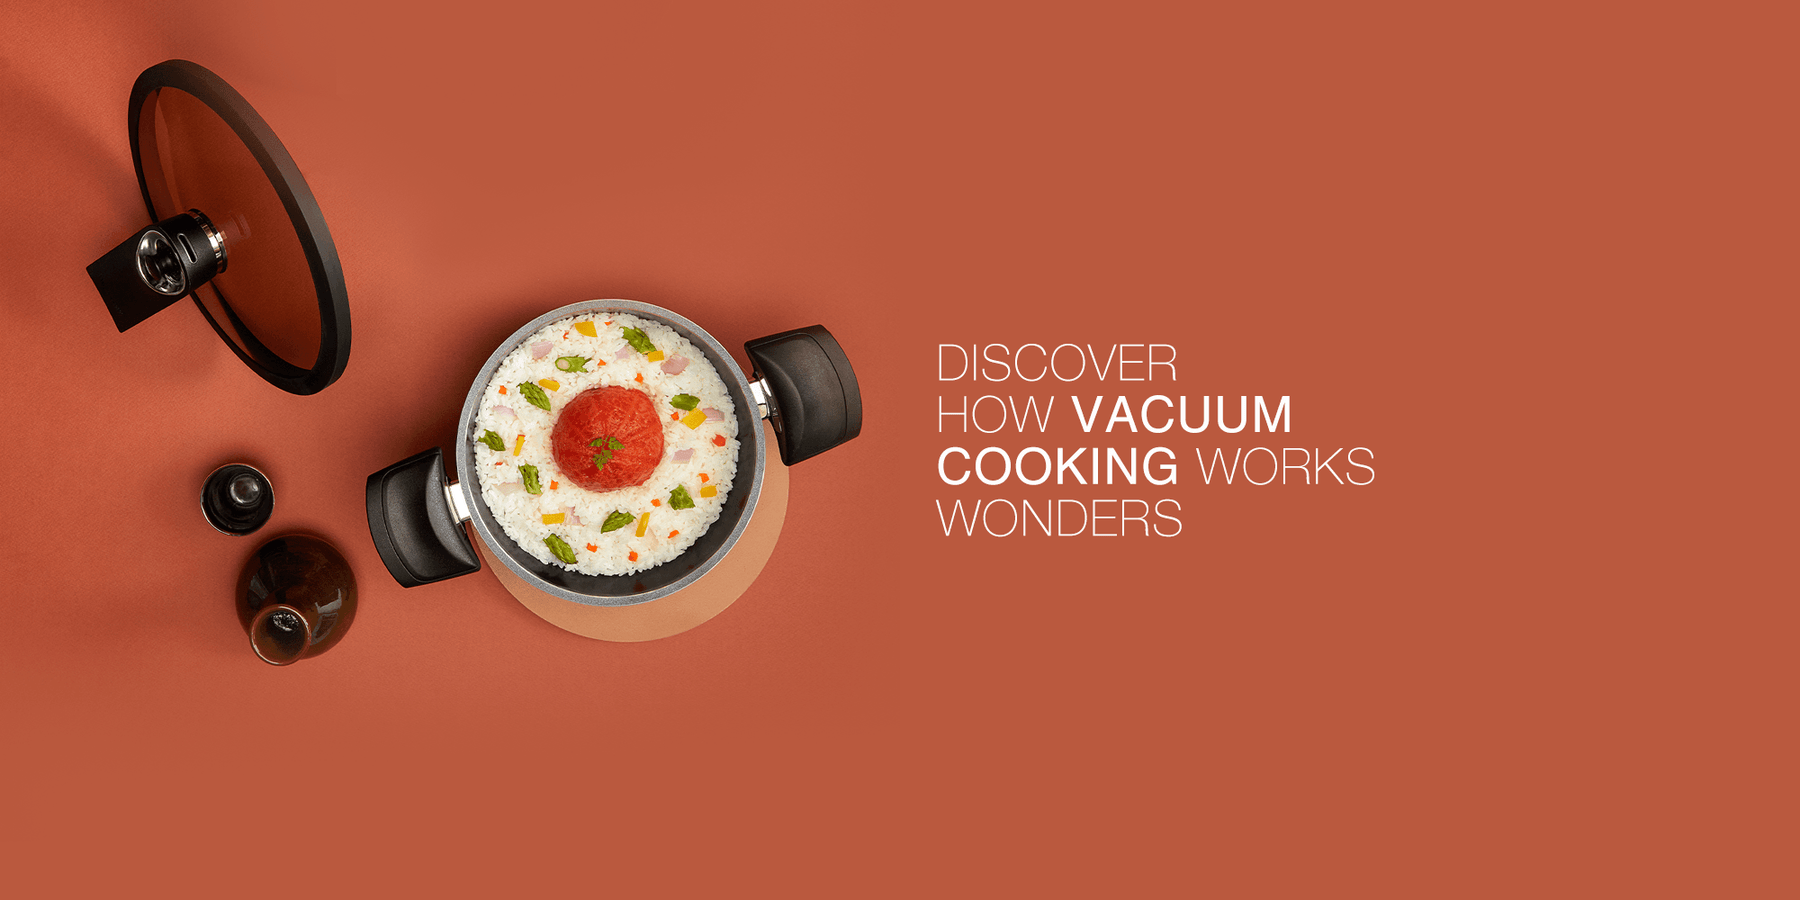 Discover how vacuum cooking works wonders